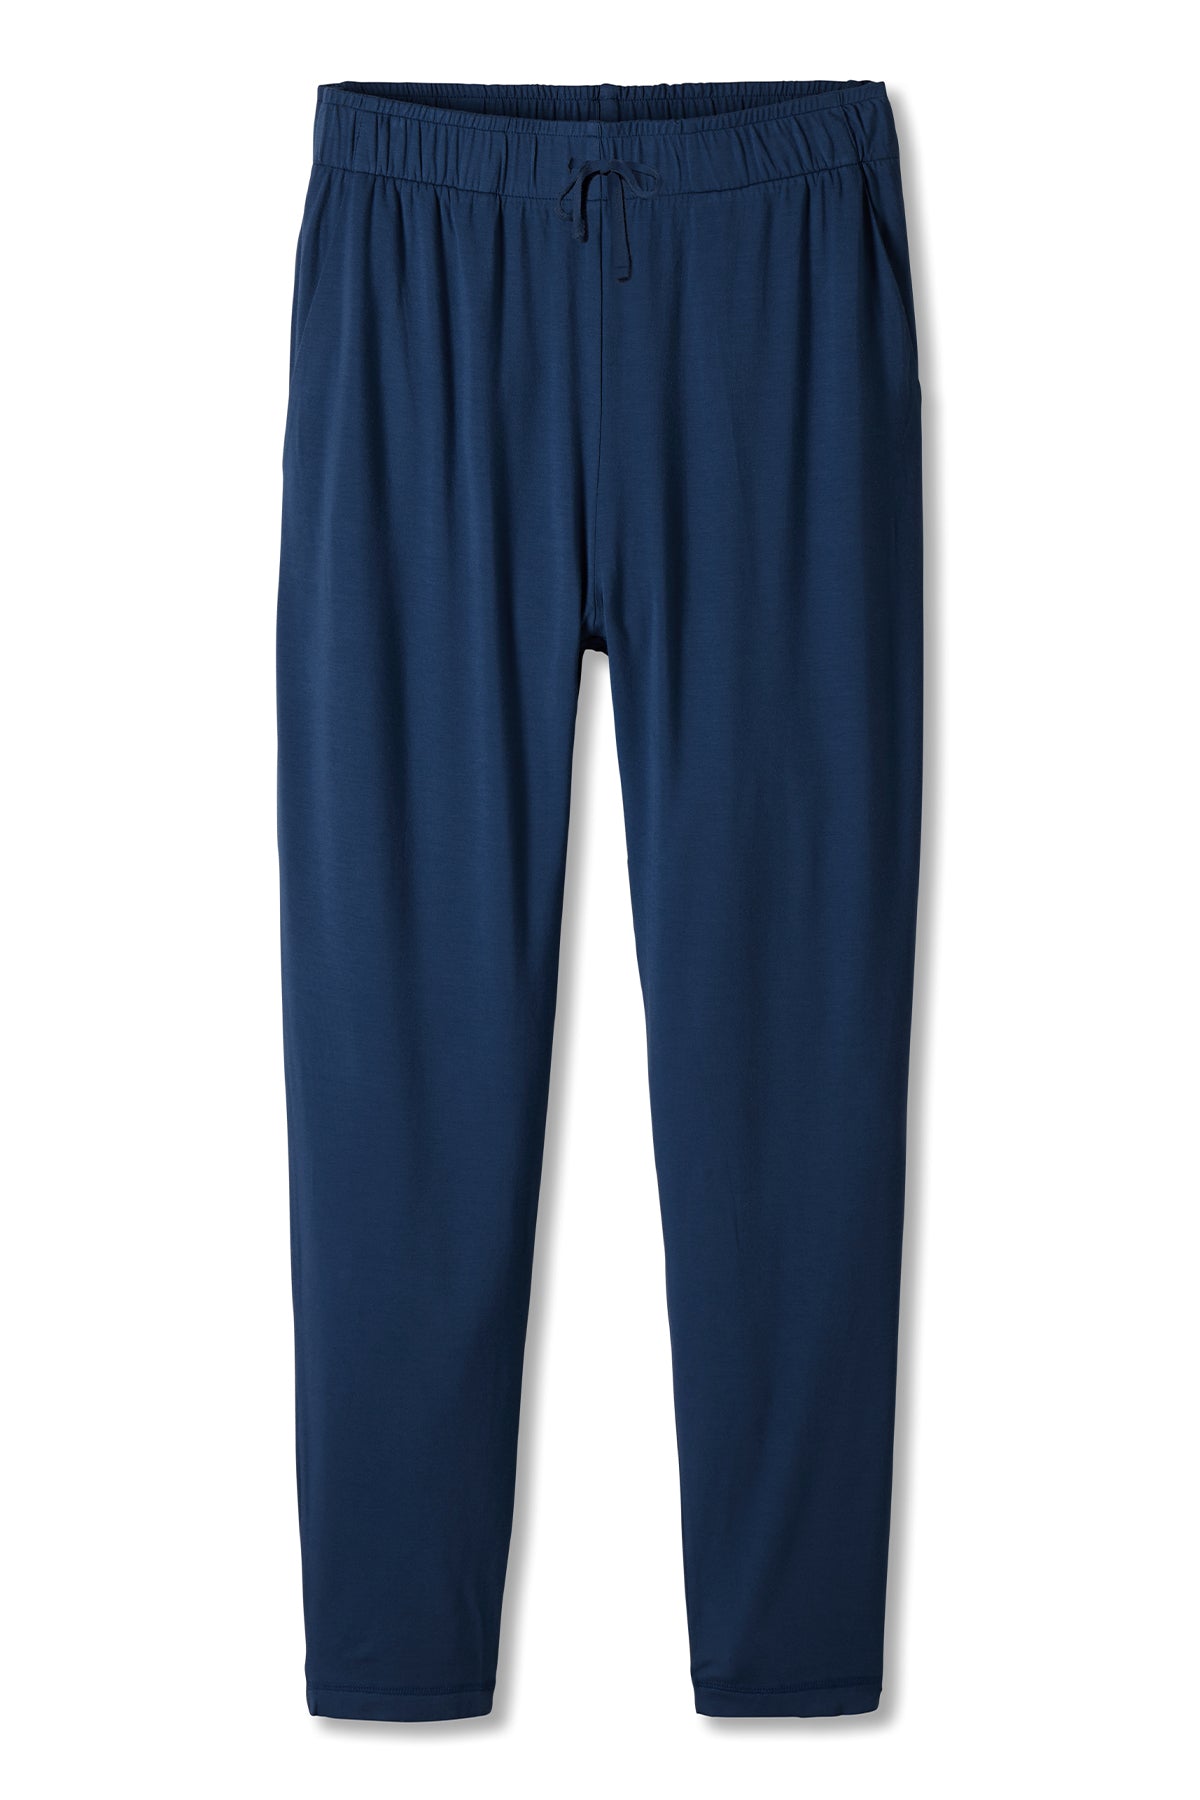 Aslsiy Mens Pajama Bottoms Navy Airplanes Pajama Pants for Men Traveling  Pattern Sleep Pants Lounge PJ Pants S at  Men's Clothing store